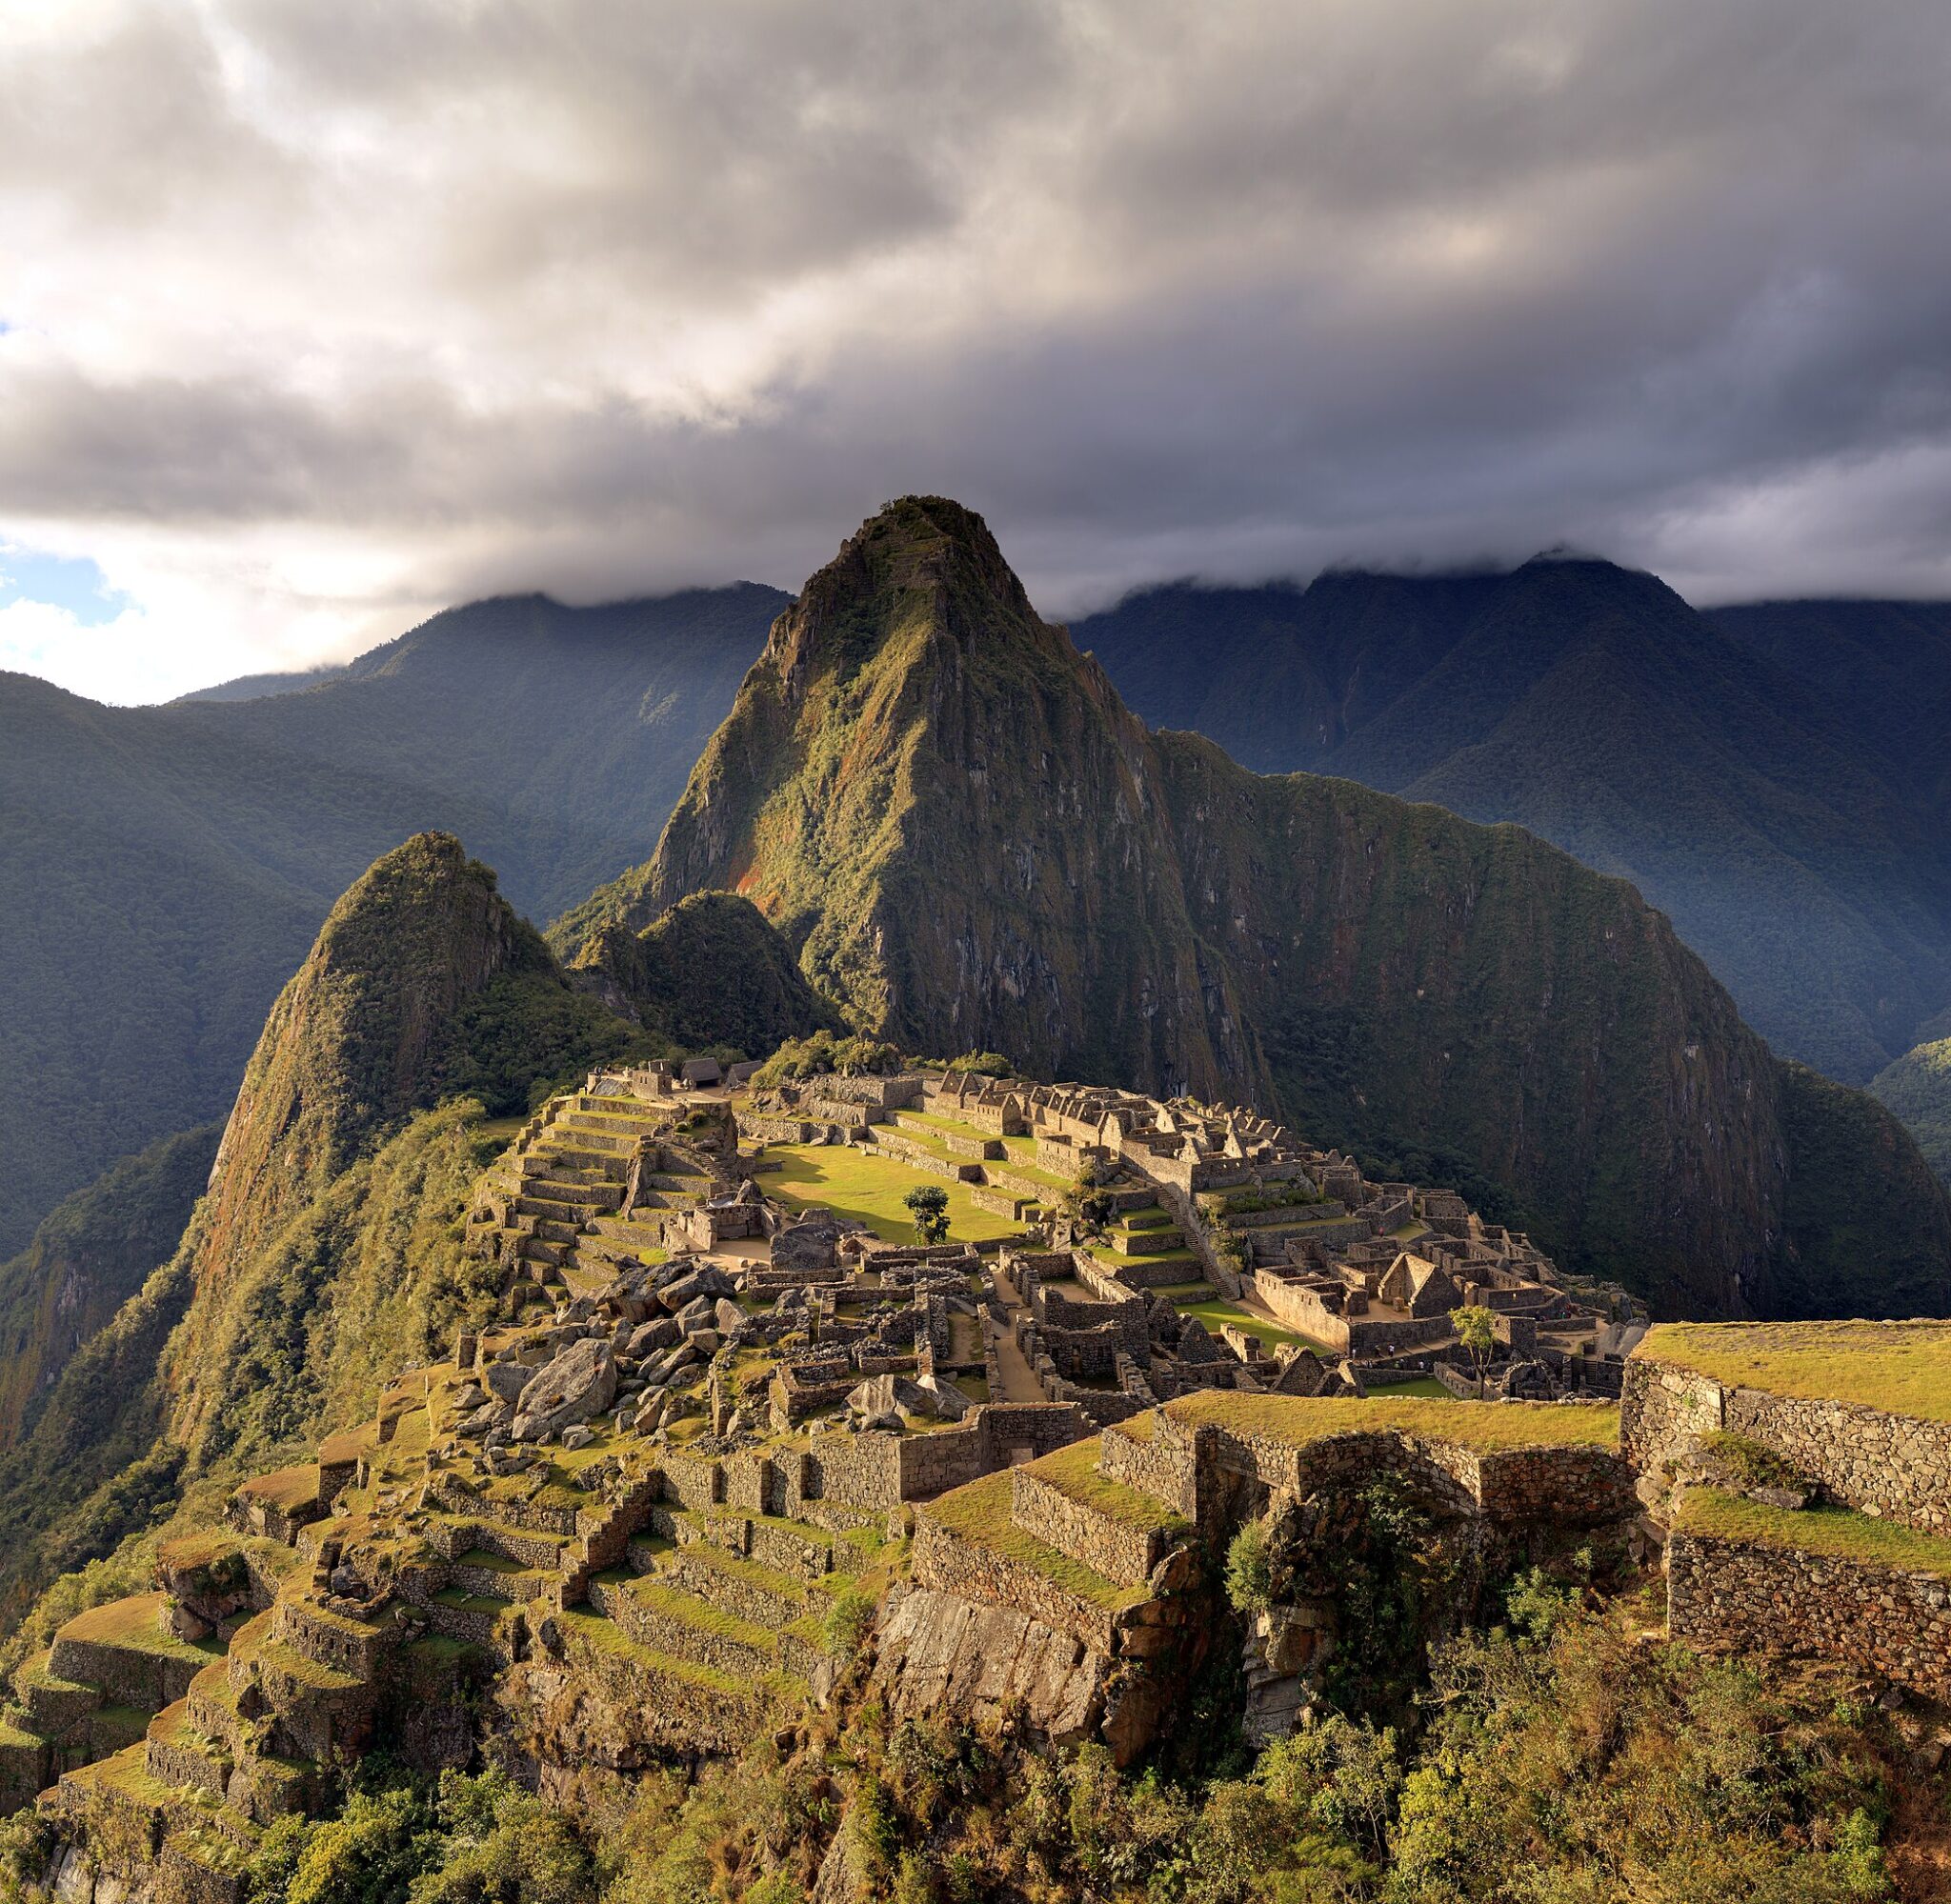 English: The Macchu Picchu, a UNESCO World Heritage Site near Cusco in Peru, at twilight. Martin St-Amant (S23678)